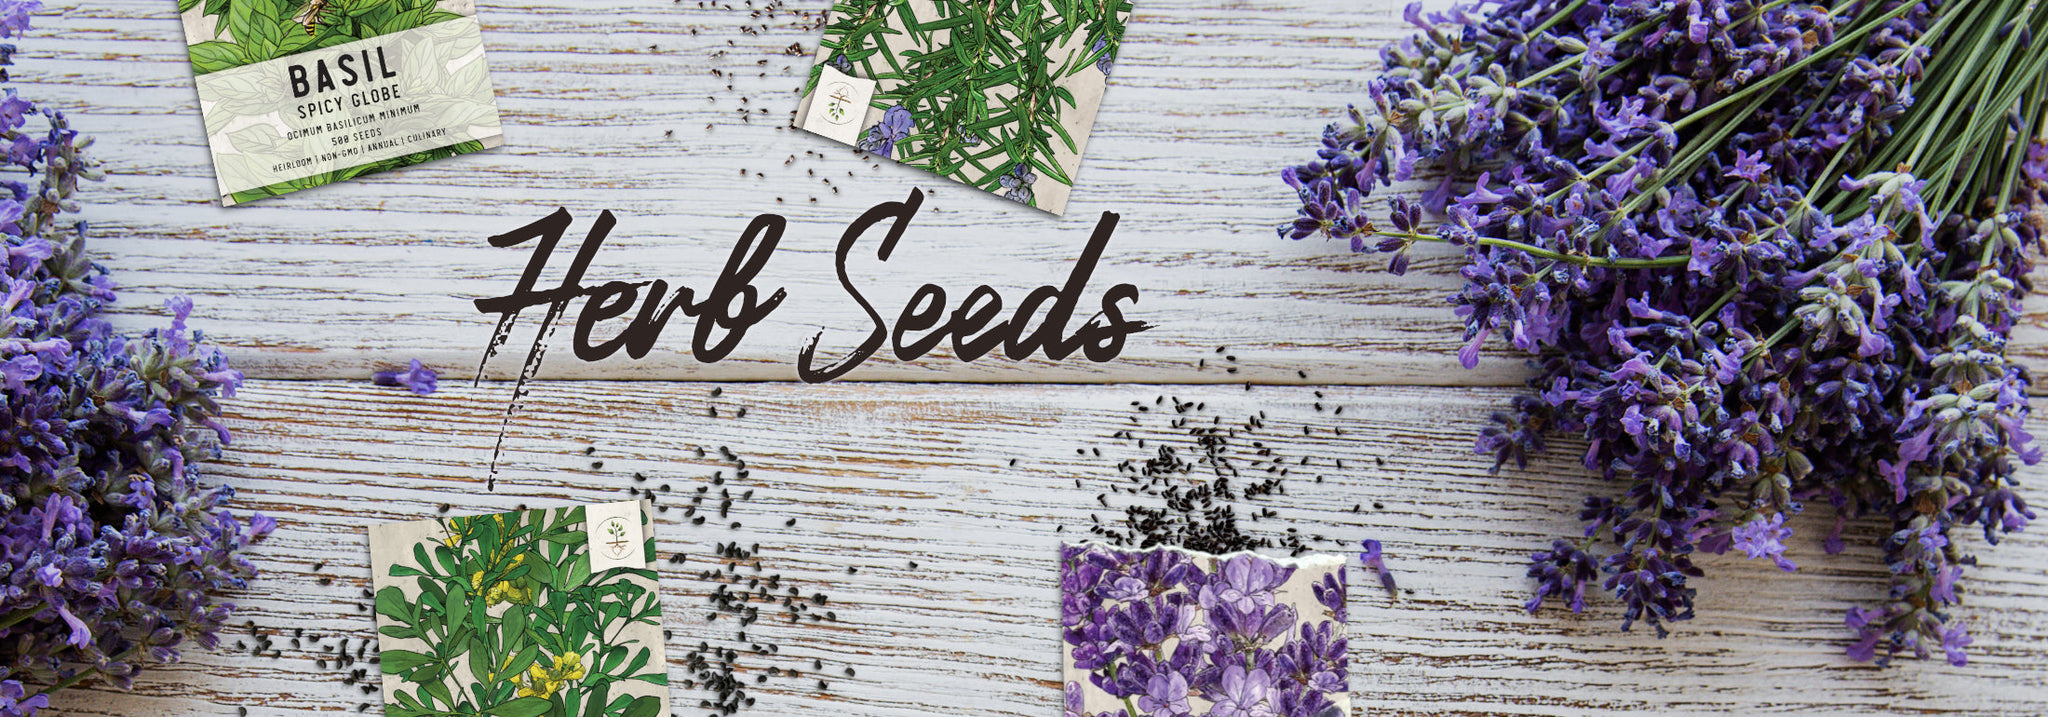 Plant-my-seeds | Buy fresh Organic, Heirloom Herb Seeds - Plant Care & Grow Guide